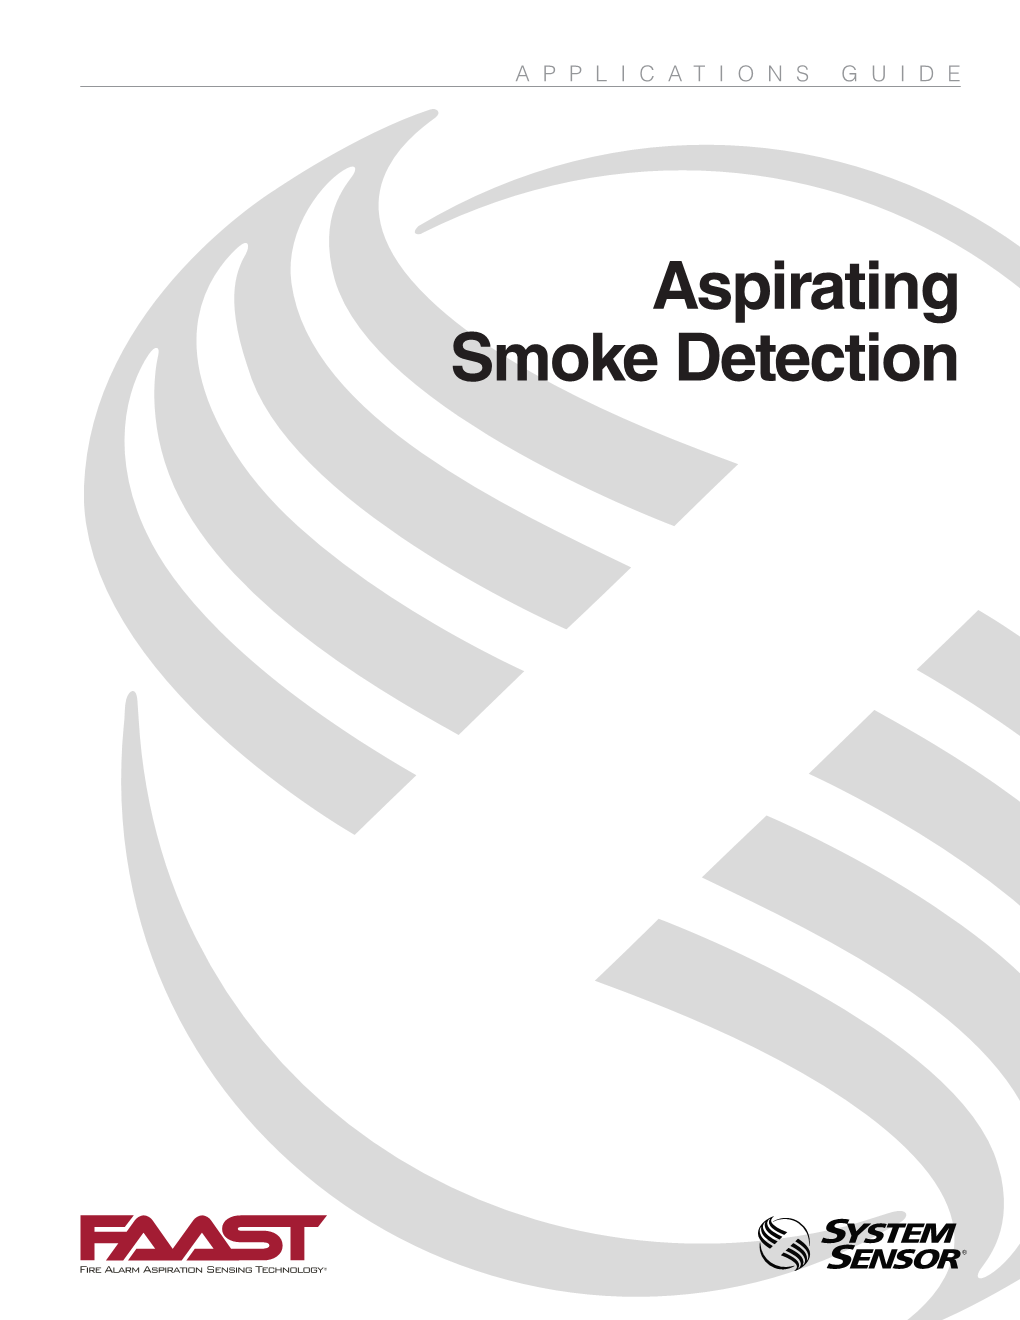 Aspirating Smoke Detection APPLICATIONS GUIDE: ASPIRATING SMOKE DETECTION Aspirating Smoke Detection